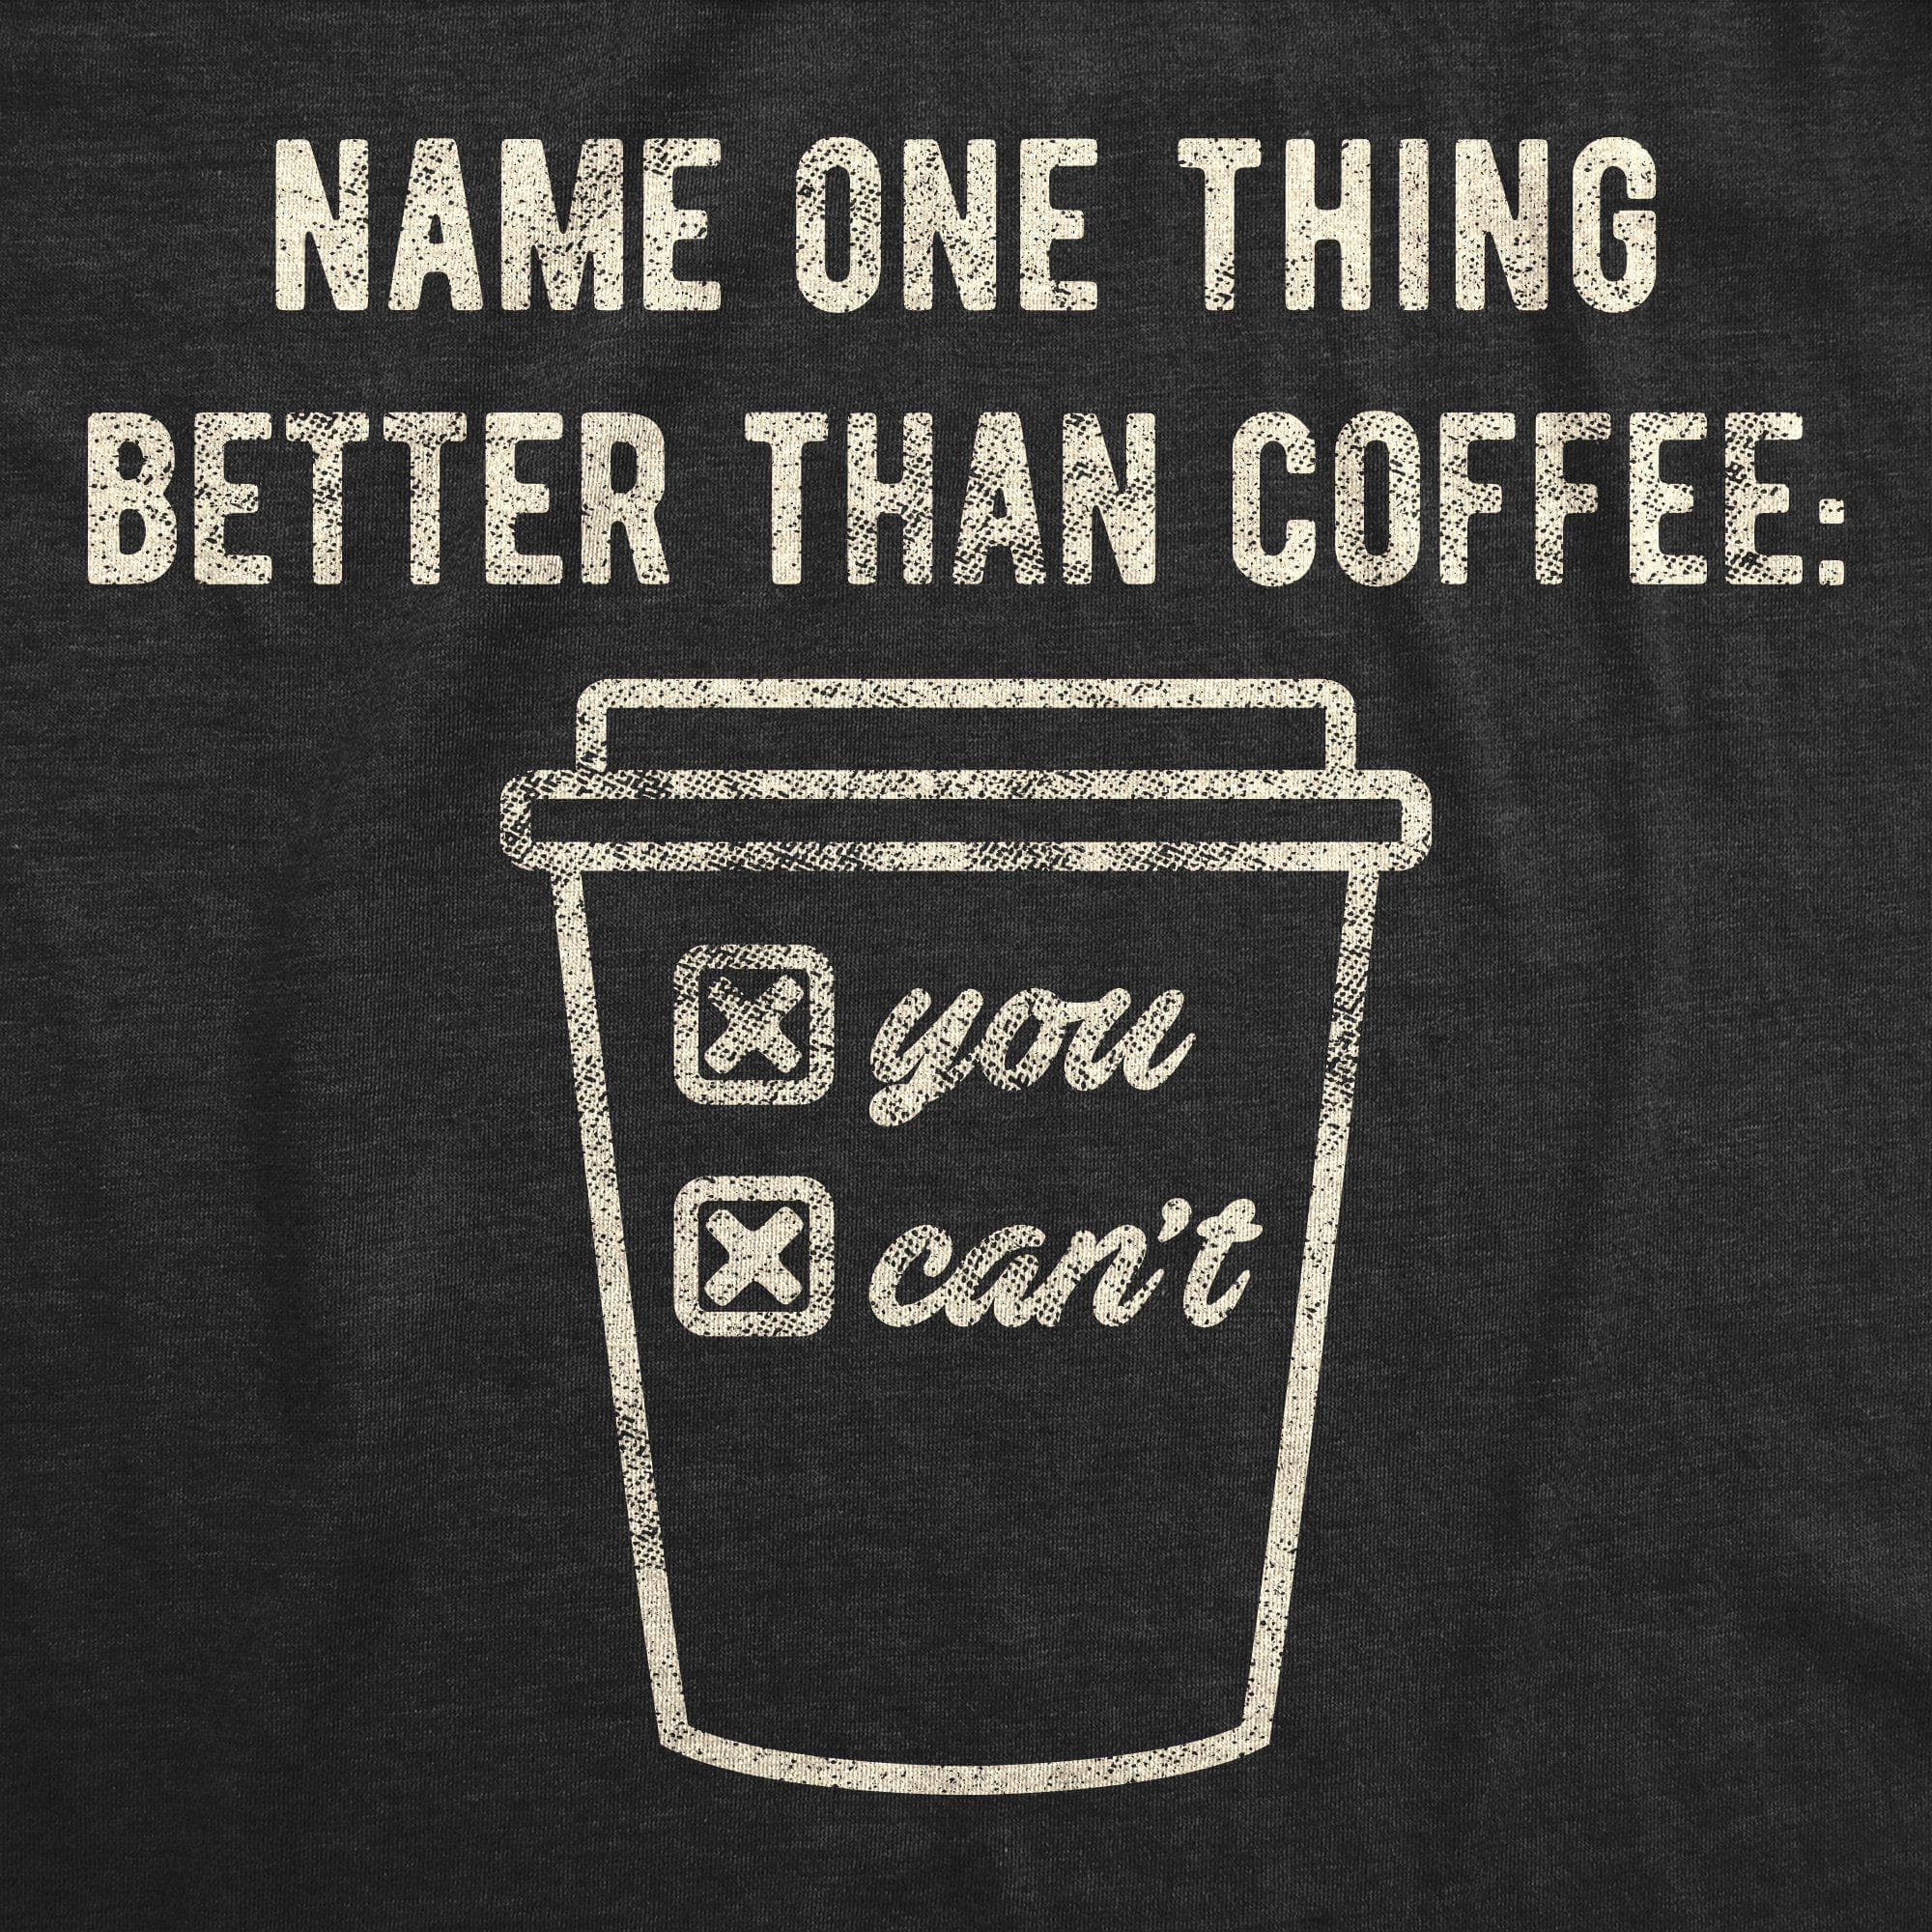 Name One Thing Better Than Coffee Men's Tshirt - Crazy Dog T-Shirts